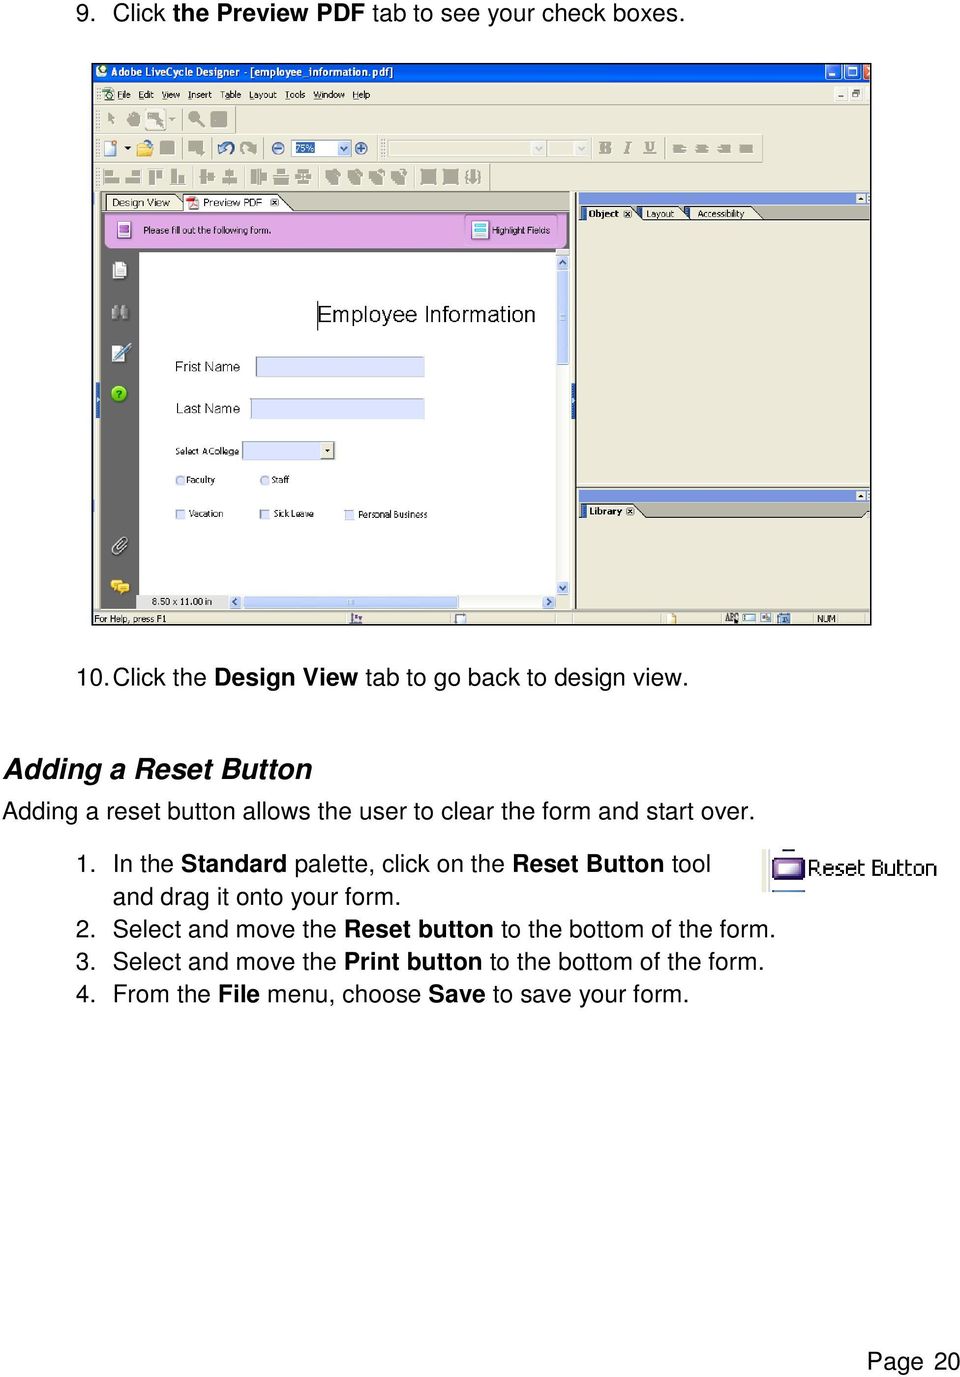 Adobe Livecycle Designer 8.0 User Manual